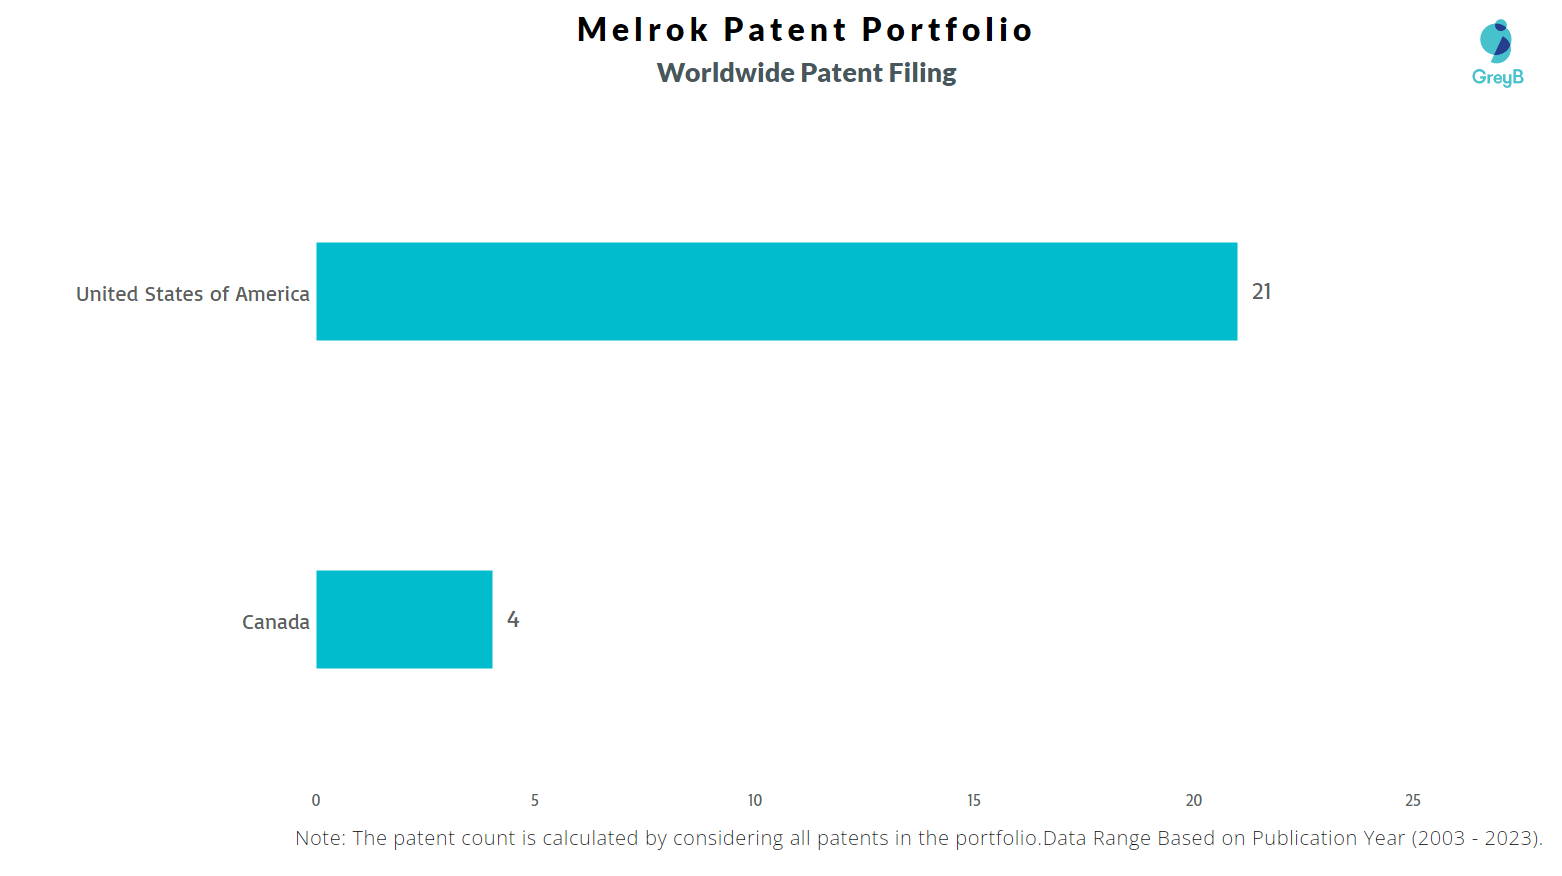 Melrok Worldwide Patent Filing